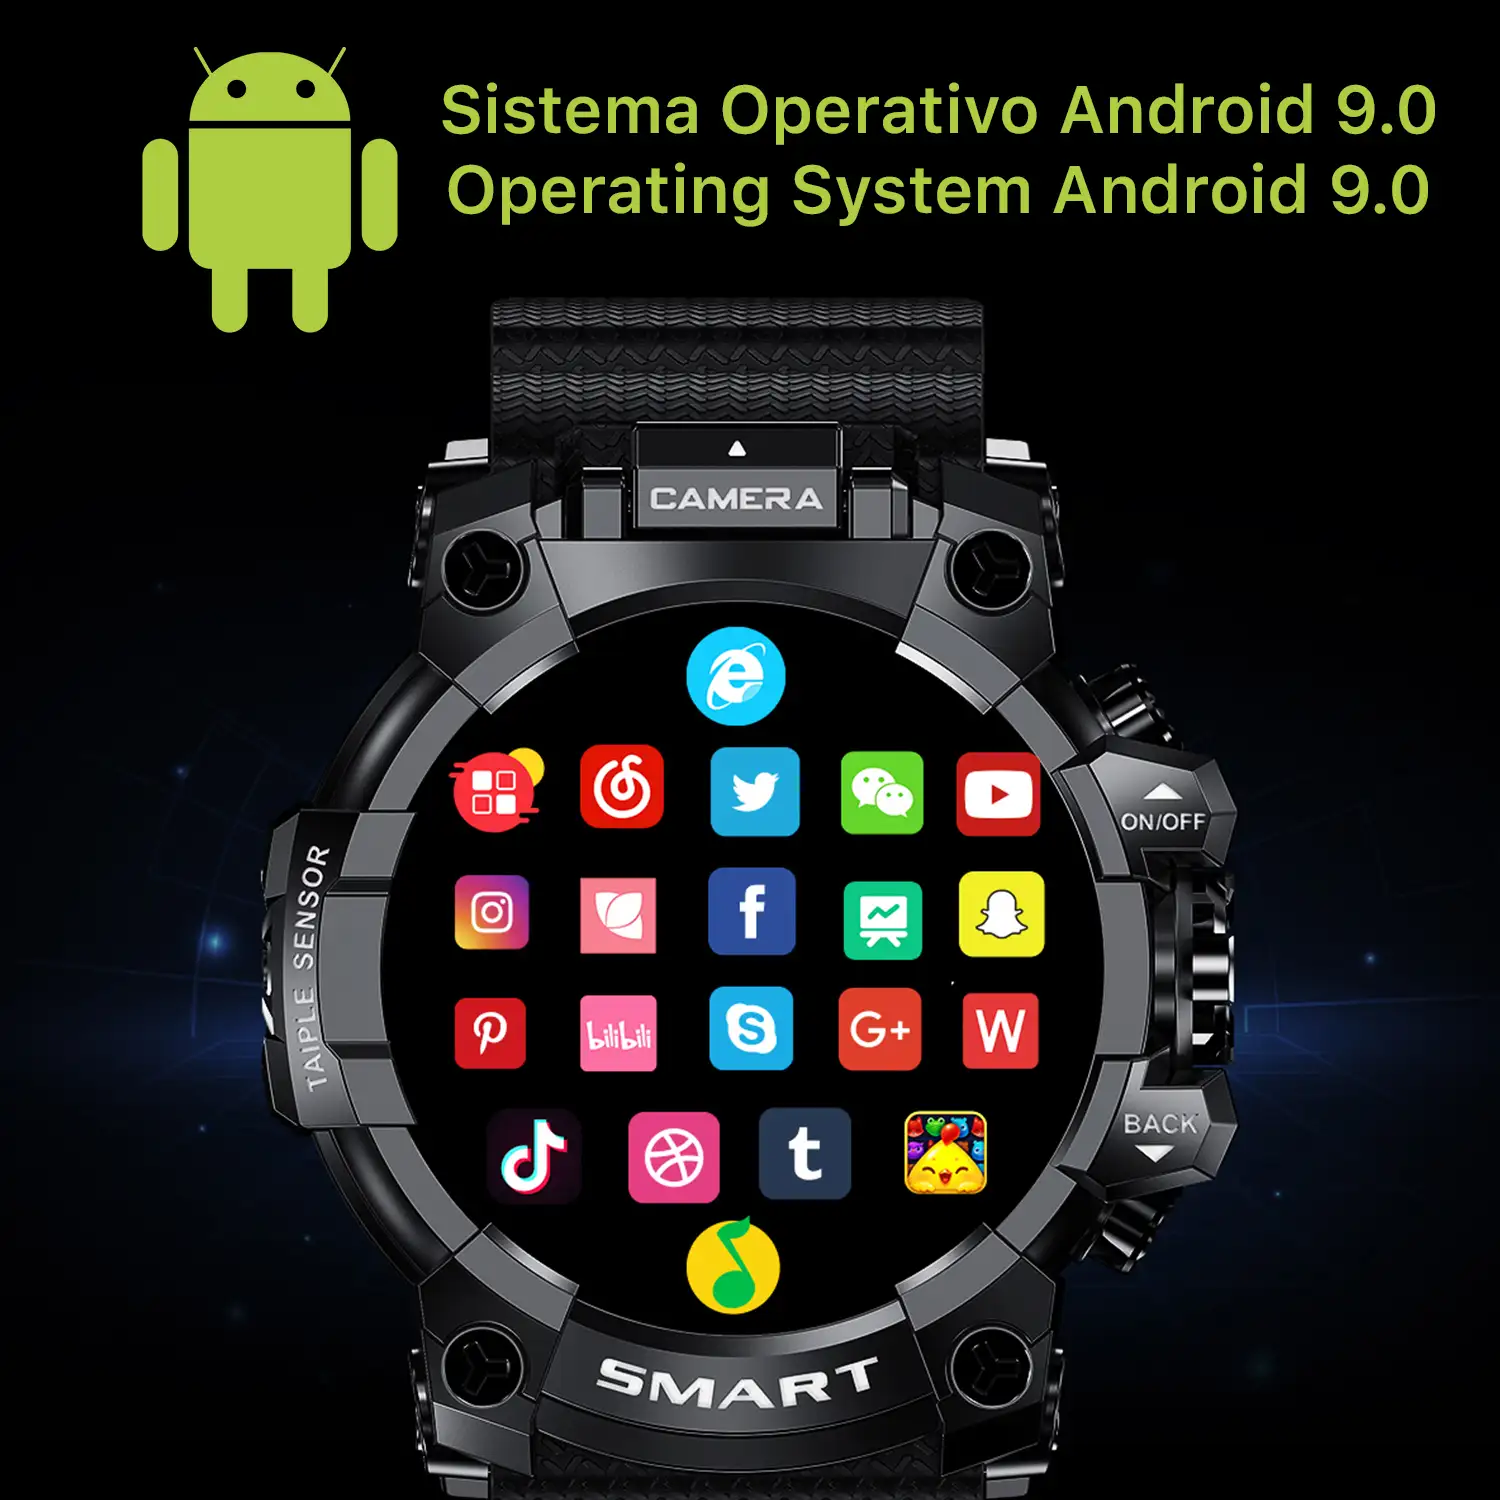 Smartwatch Phone Q999 4G con SO Android 9.0, Quad Core, Wifi, GPS. Cámara incorporada.